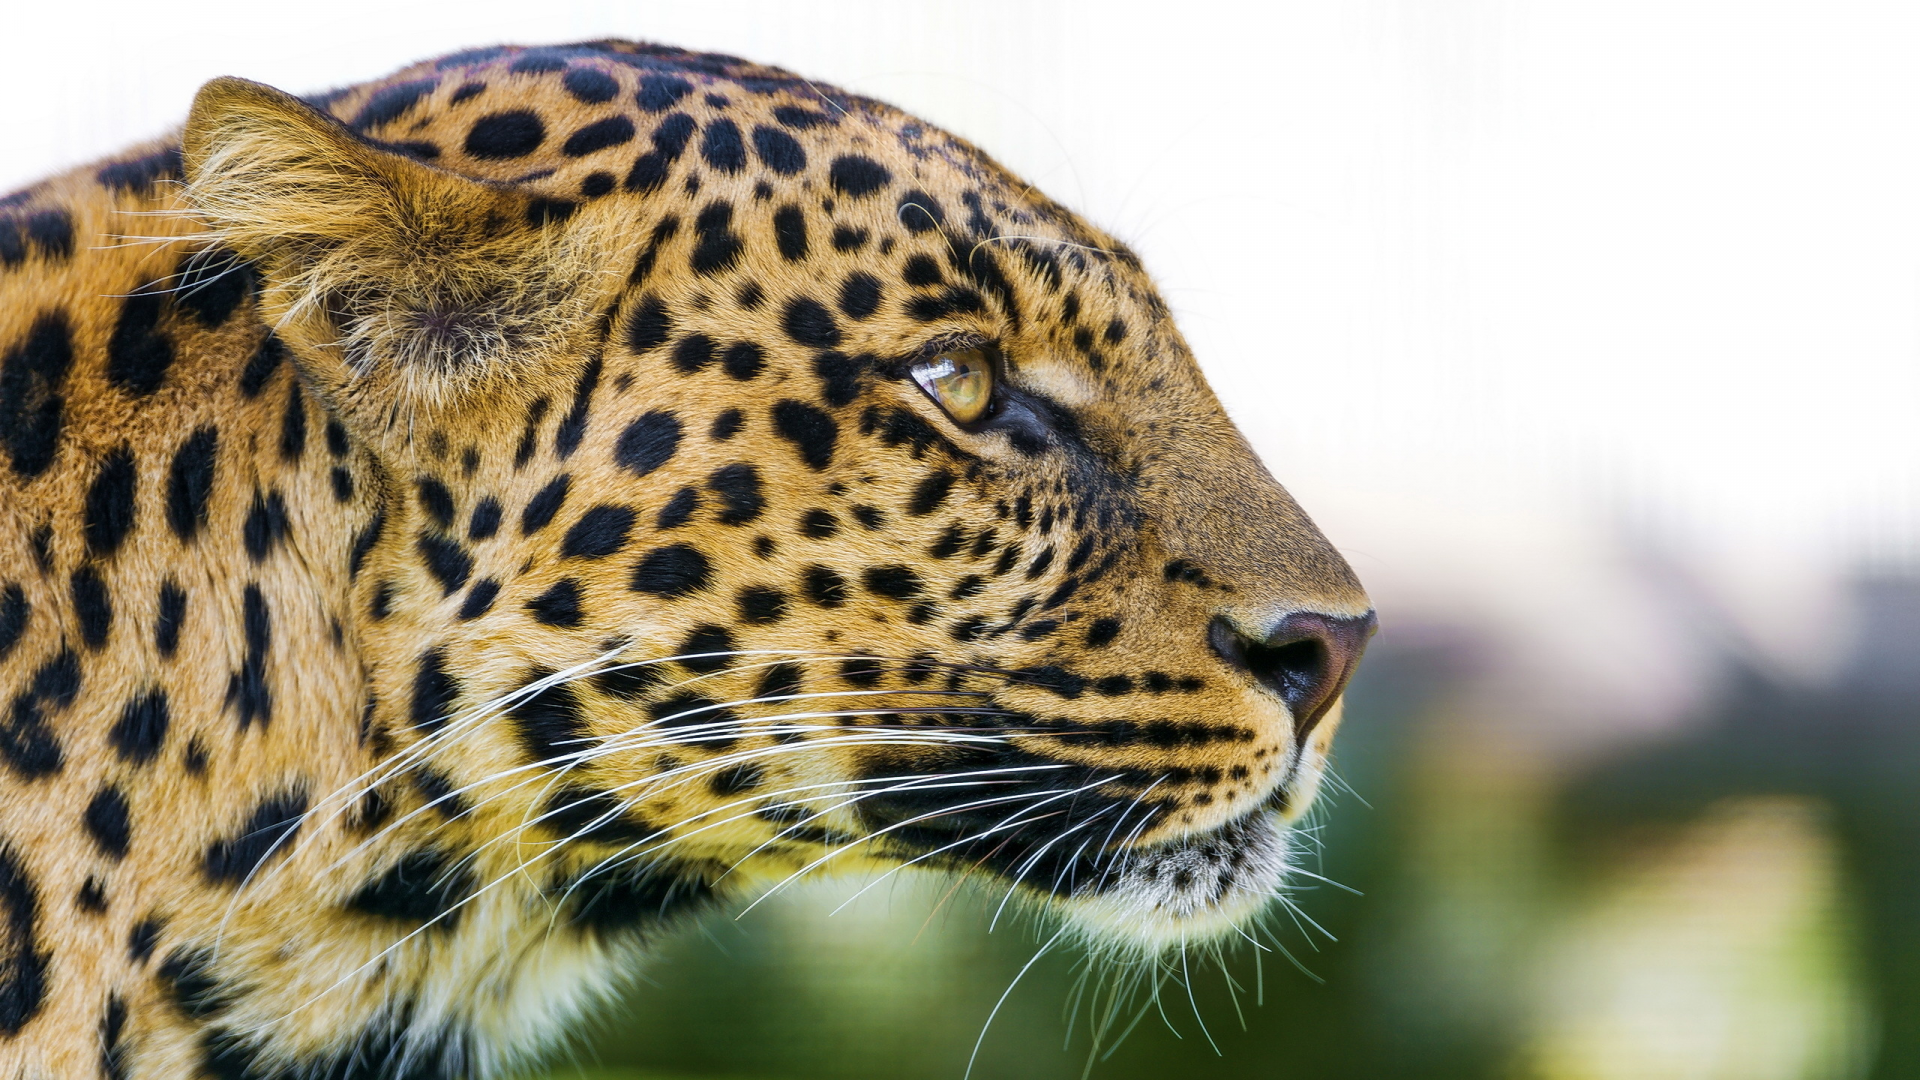 хищник, профиль, морда, взгляд, leopard, леопард, panthera pardus